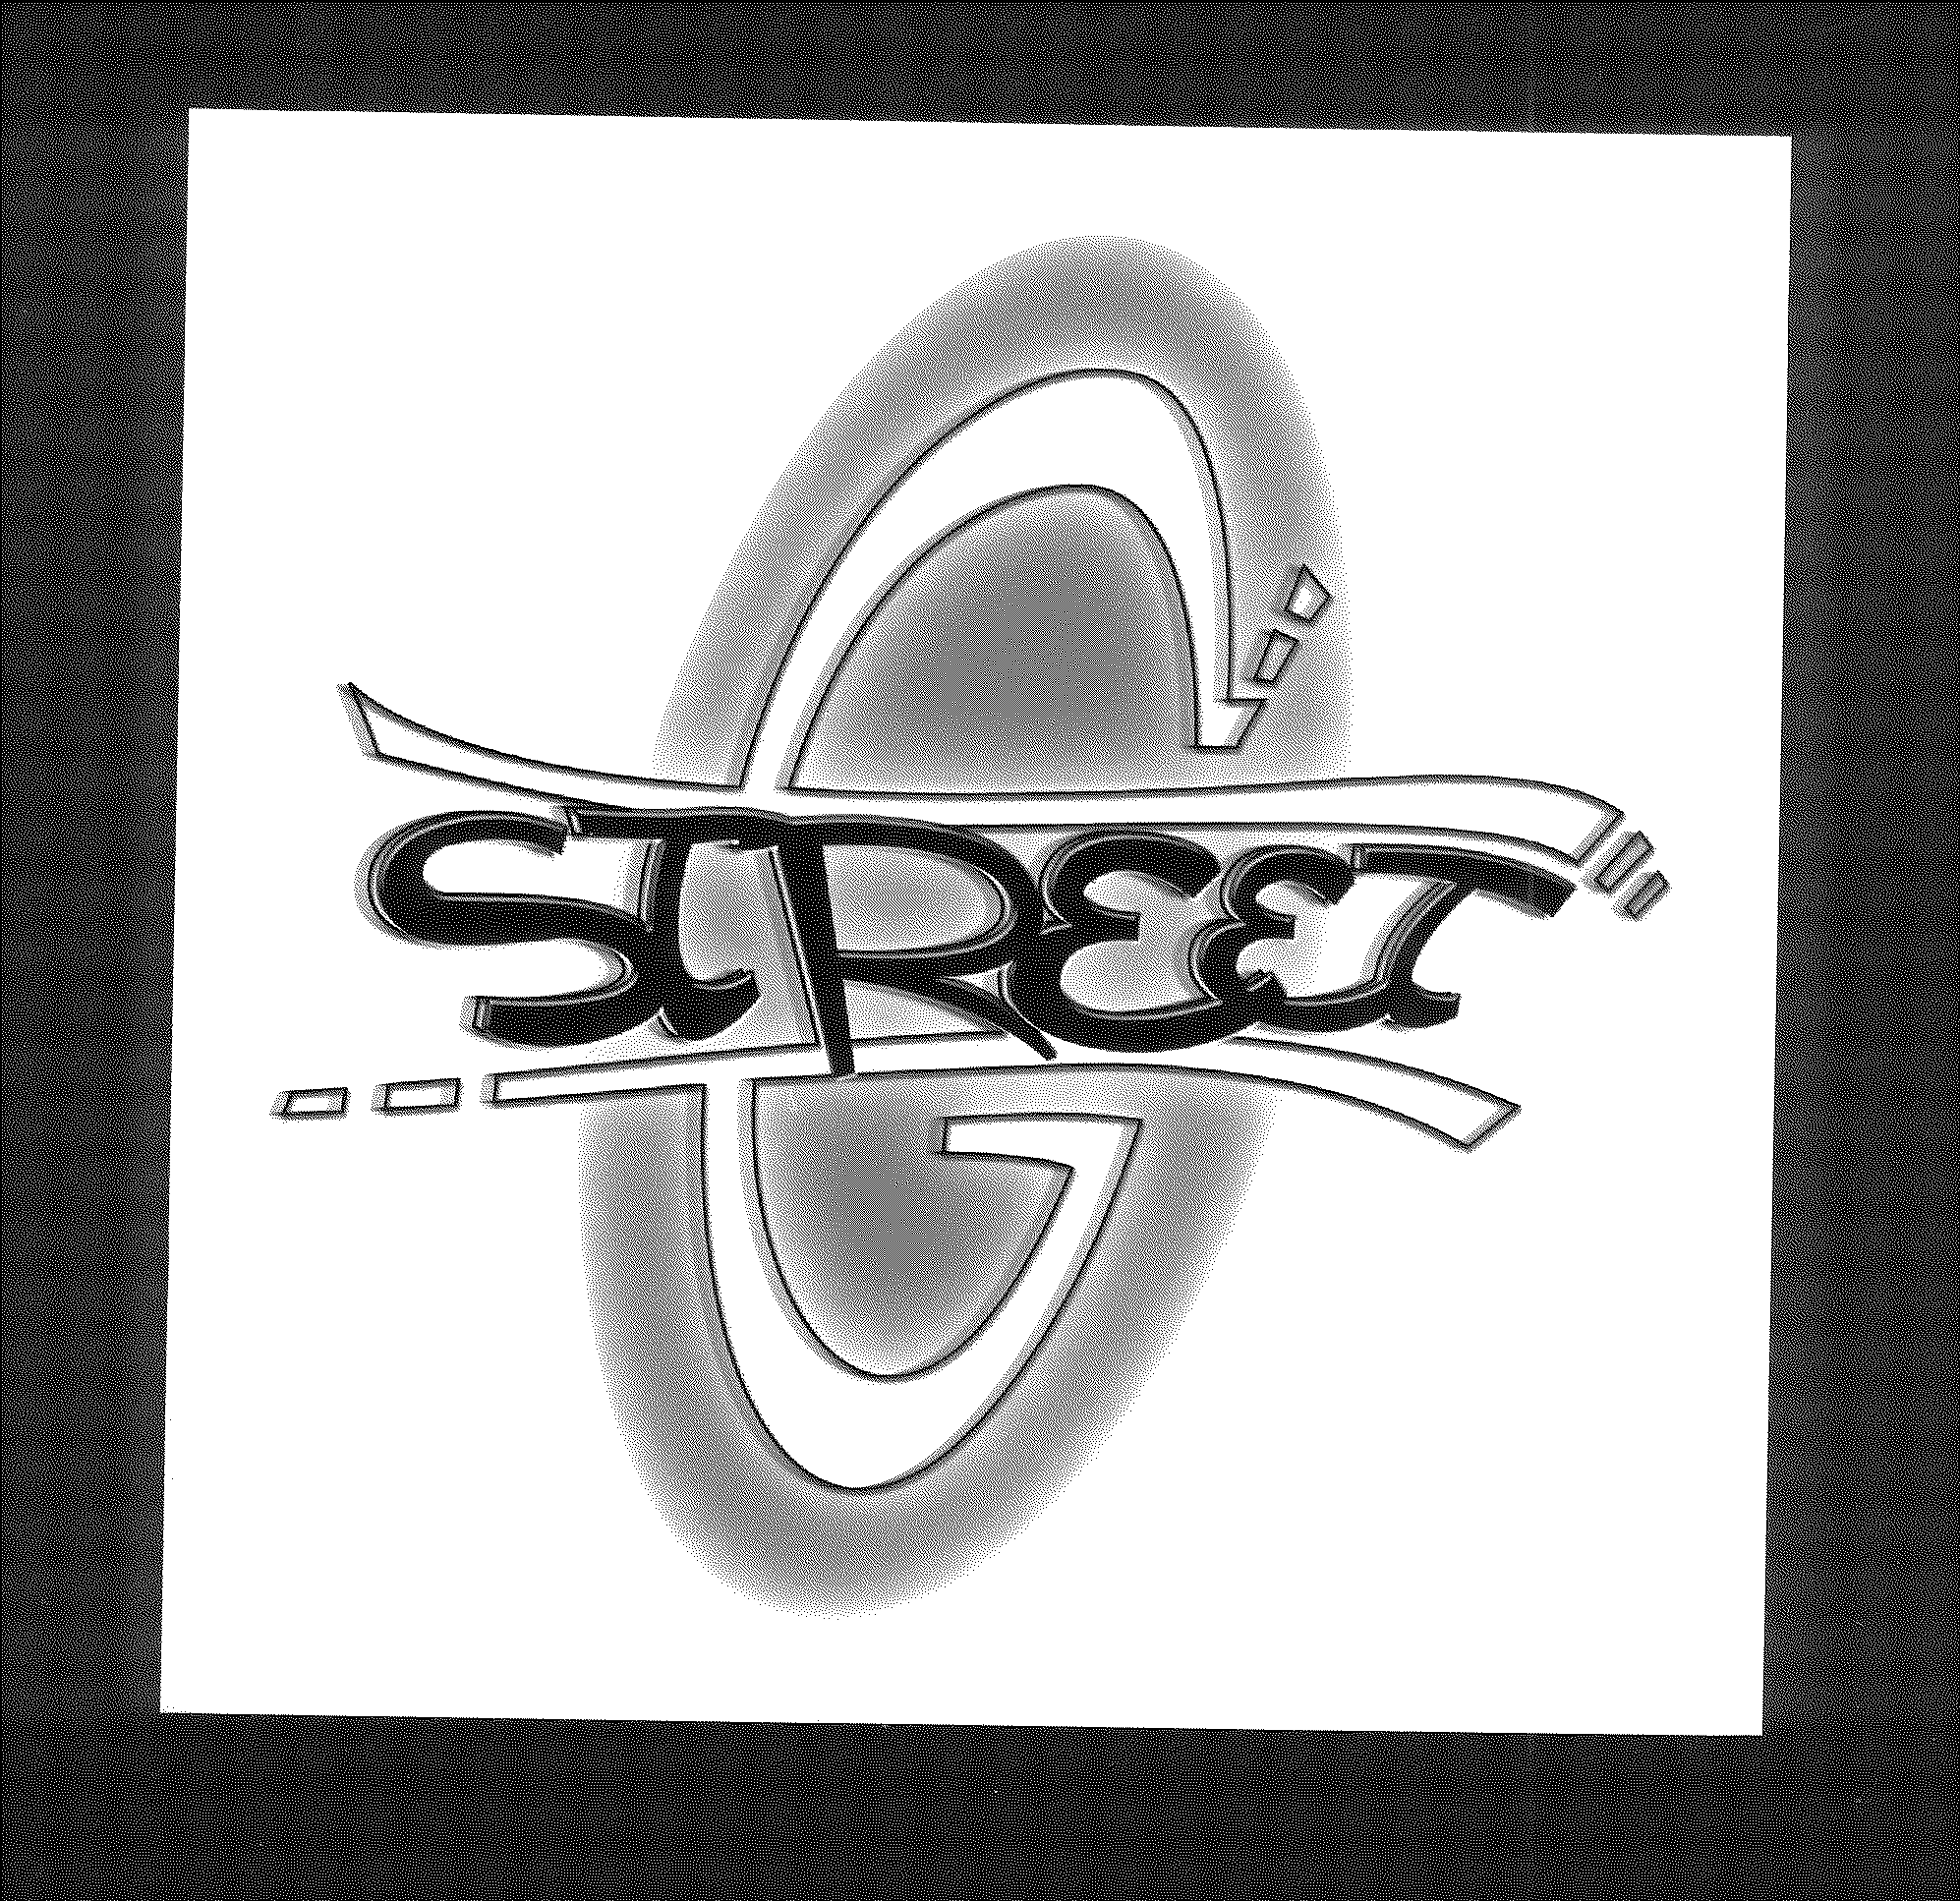 Trademark Logo STREET